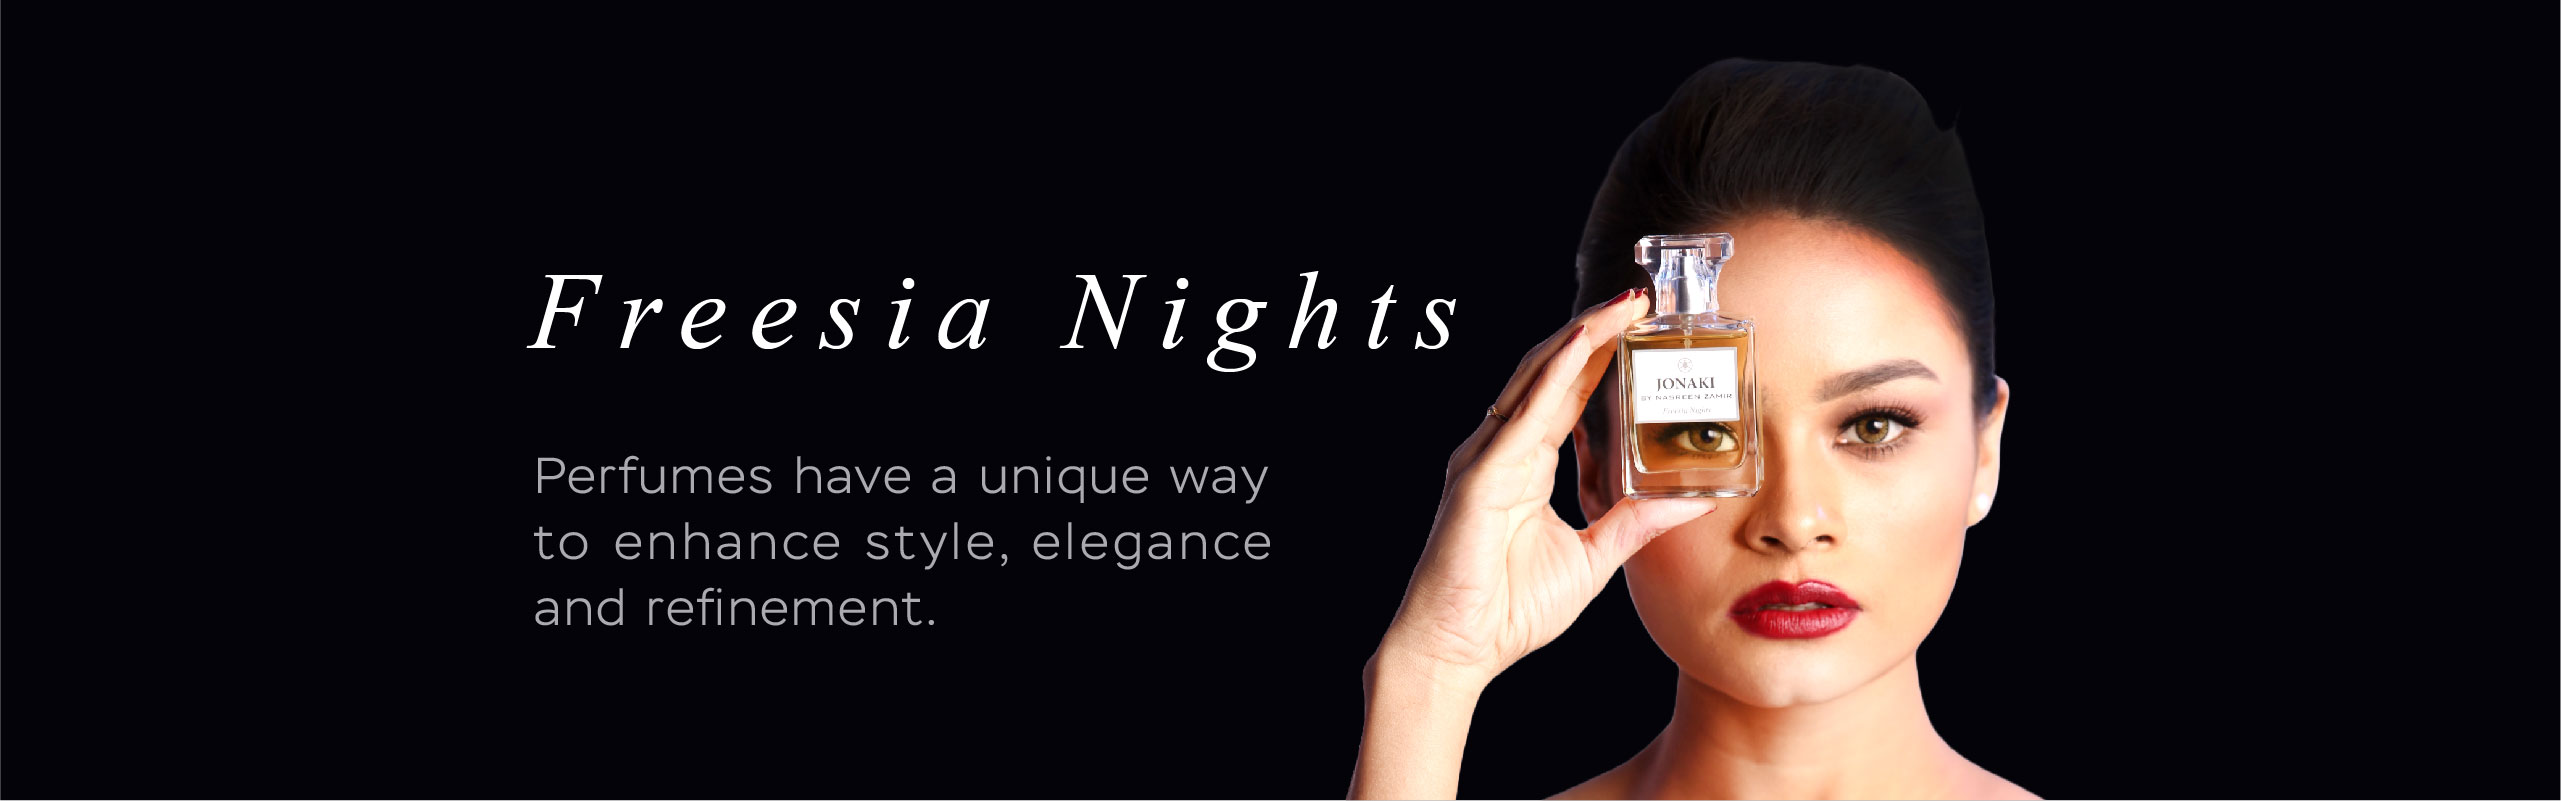 Perfume-freesia-nights